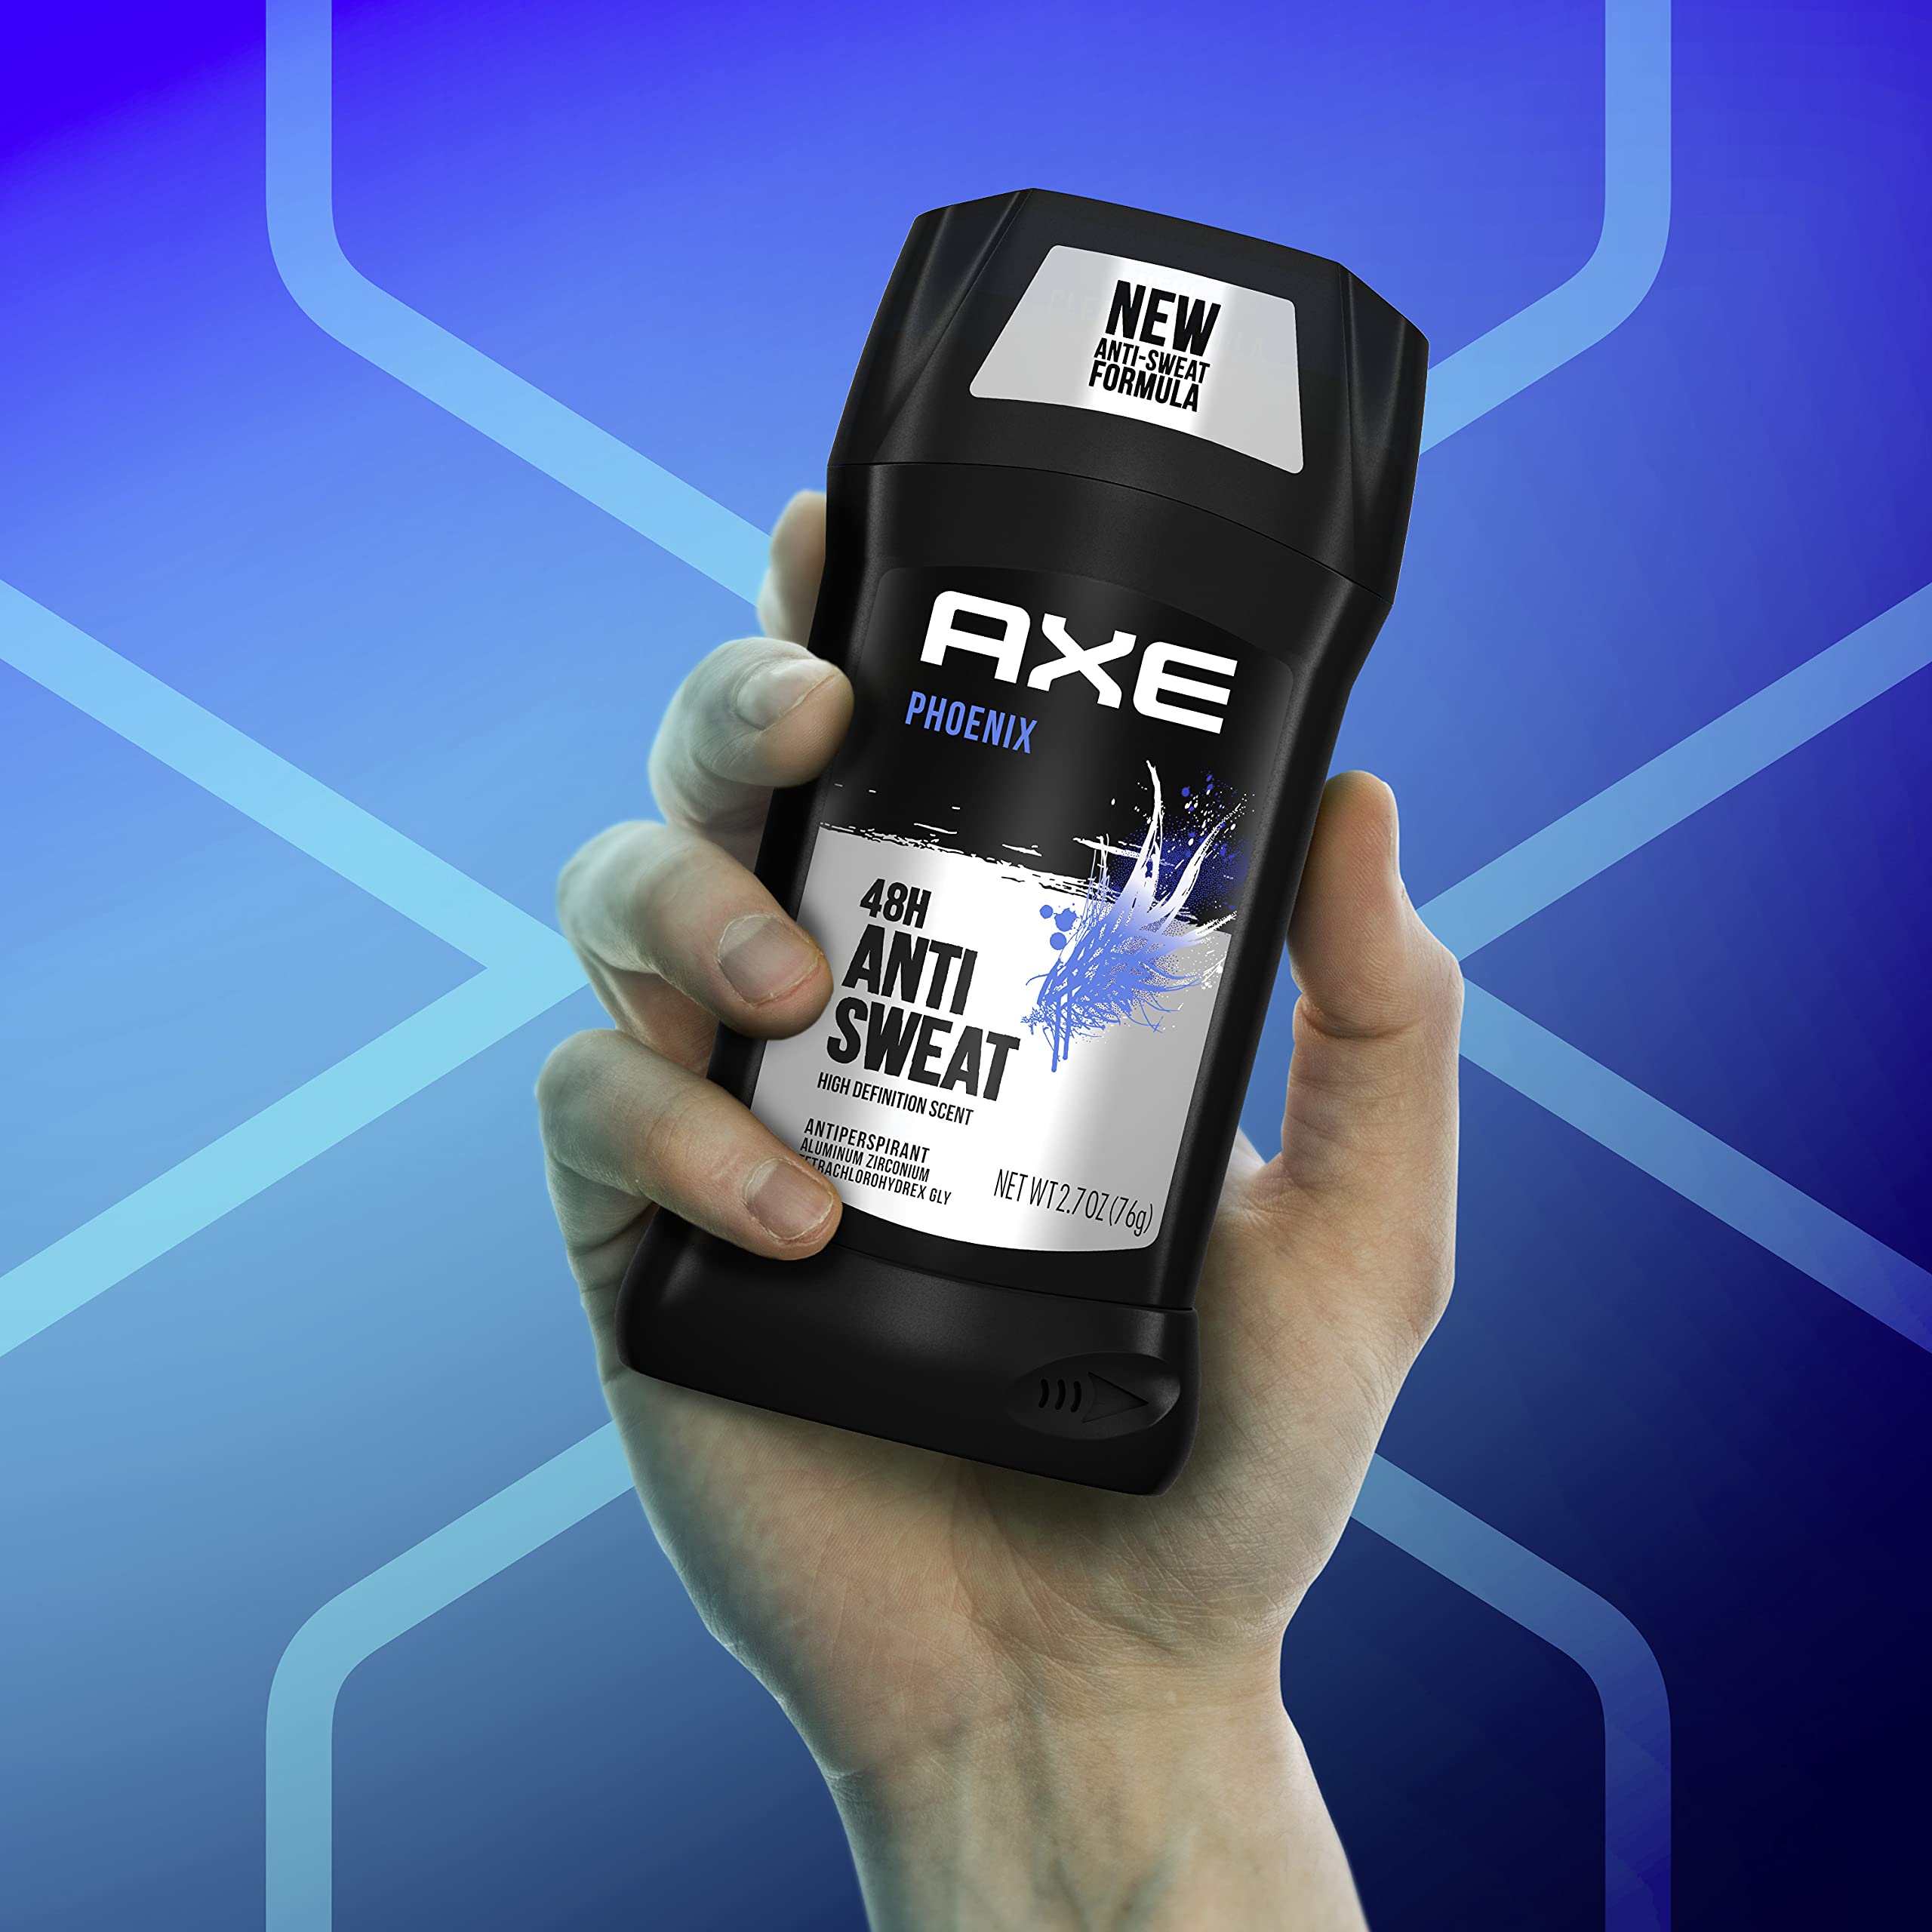 AXE Phoenix 48H Anti Sweat High Definition Scent Men's Antiperspirant Deodorant, 2.7 oz - image 3 of 10